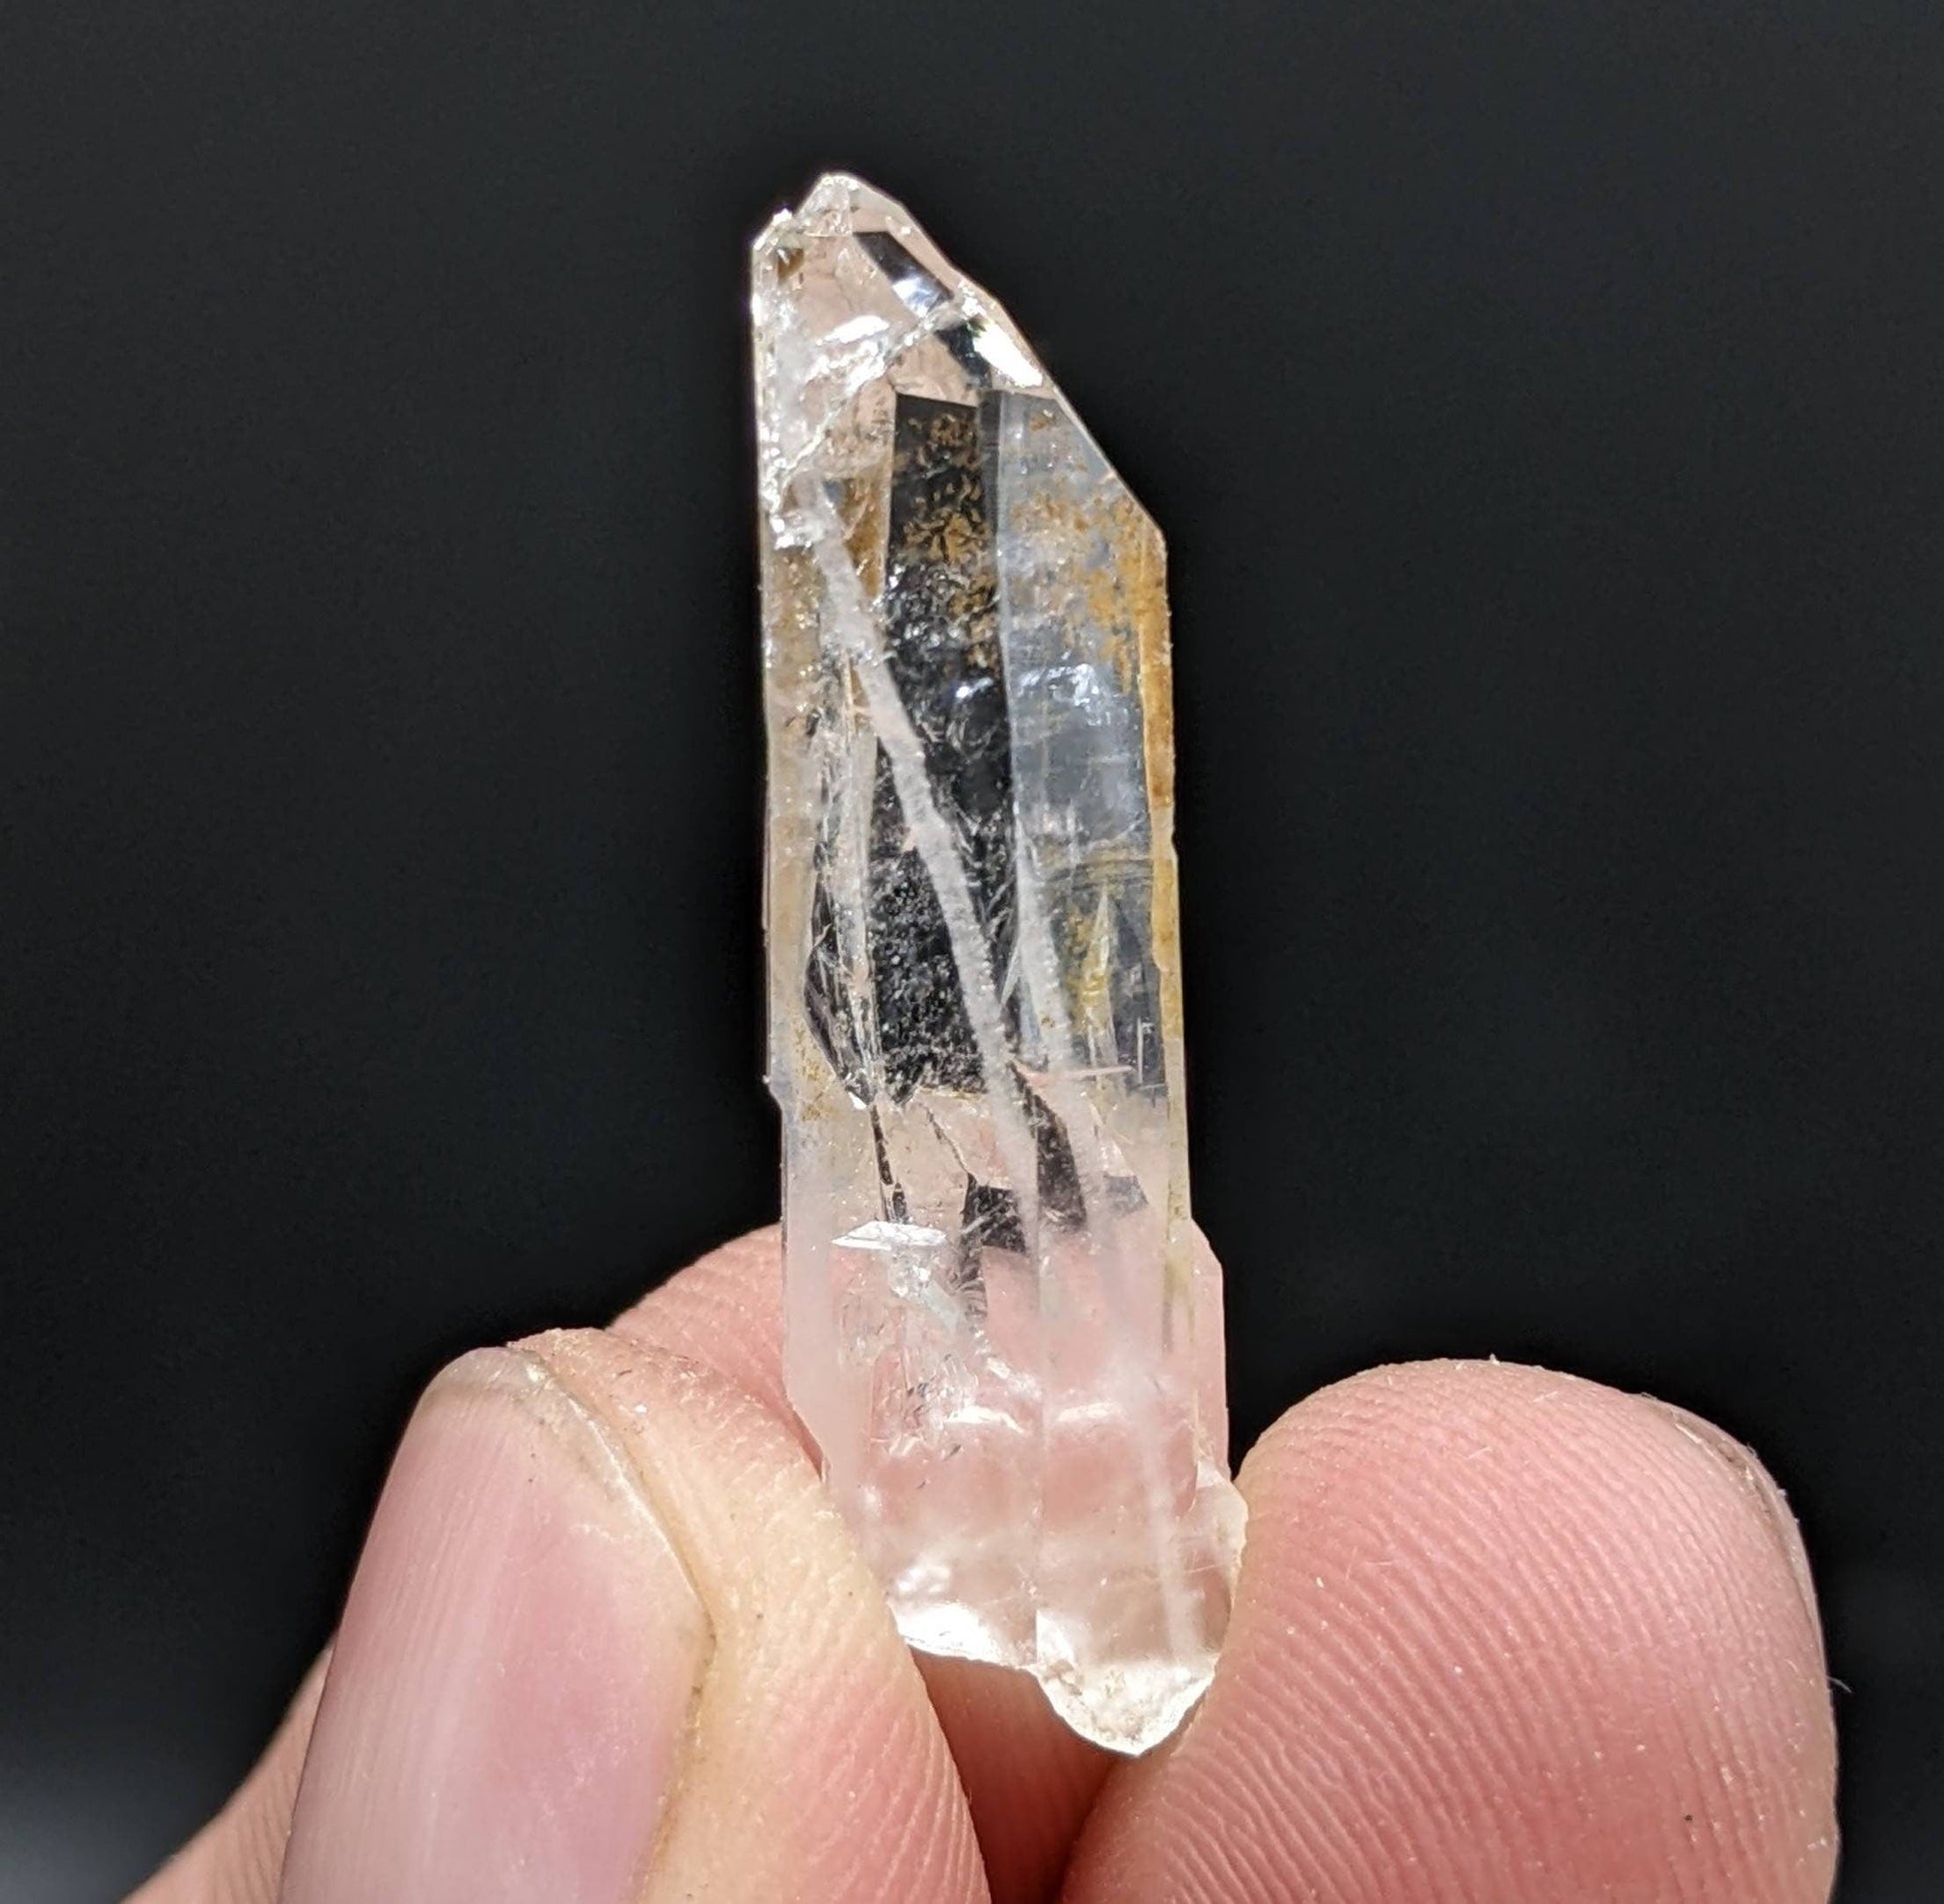 ARSAA GEMS AND MINERALSSmall thumbnail size Faden quartz crystal from Baluchistan Pakistan, 2.4 gram - Premium  from ARSAA GEMS AND MINERALS - Just $10.00! Shop now at ARSAA GEMS AND MINERALS